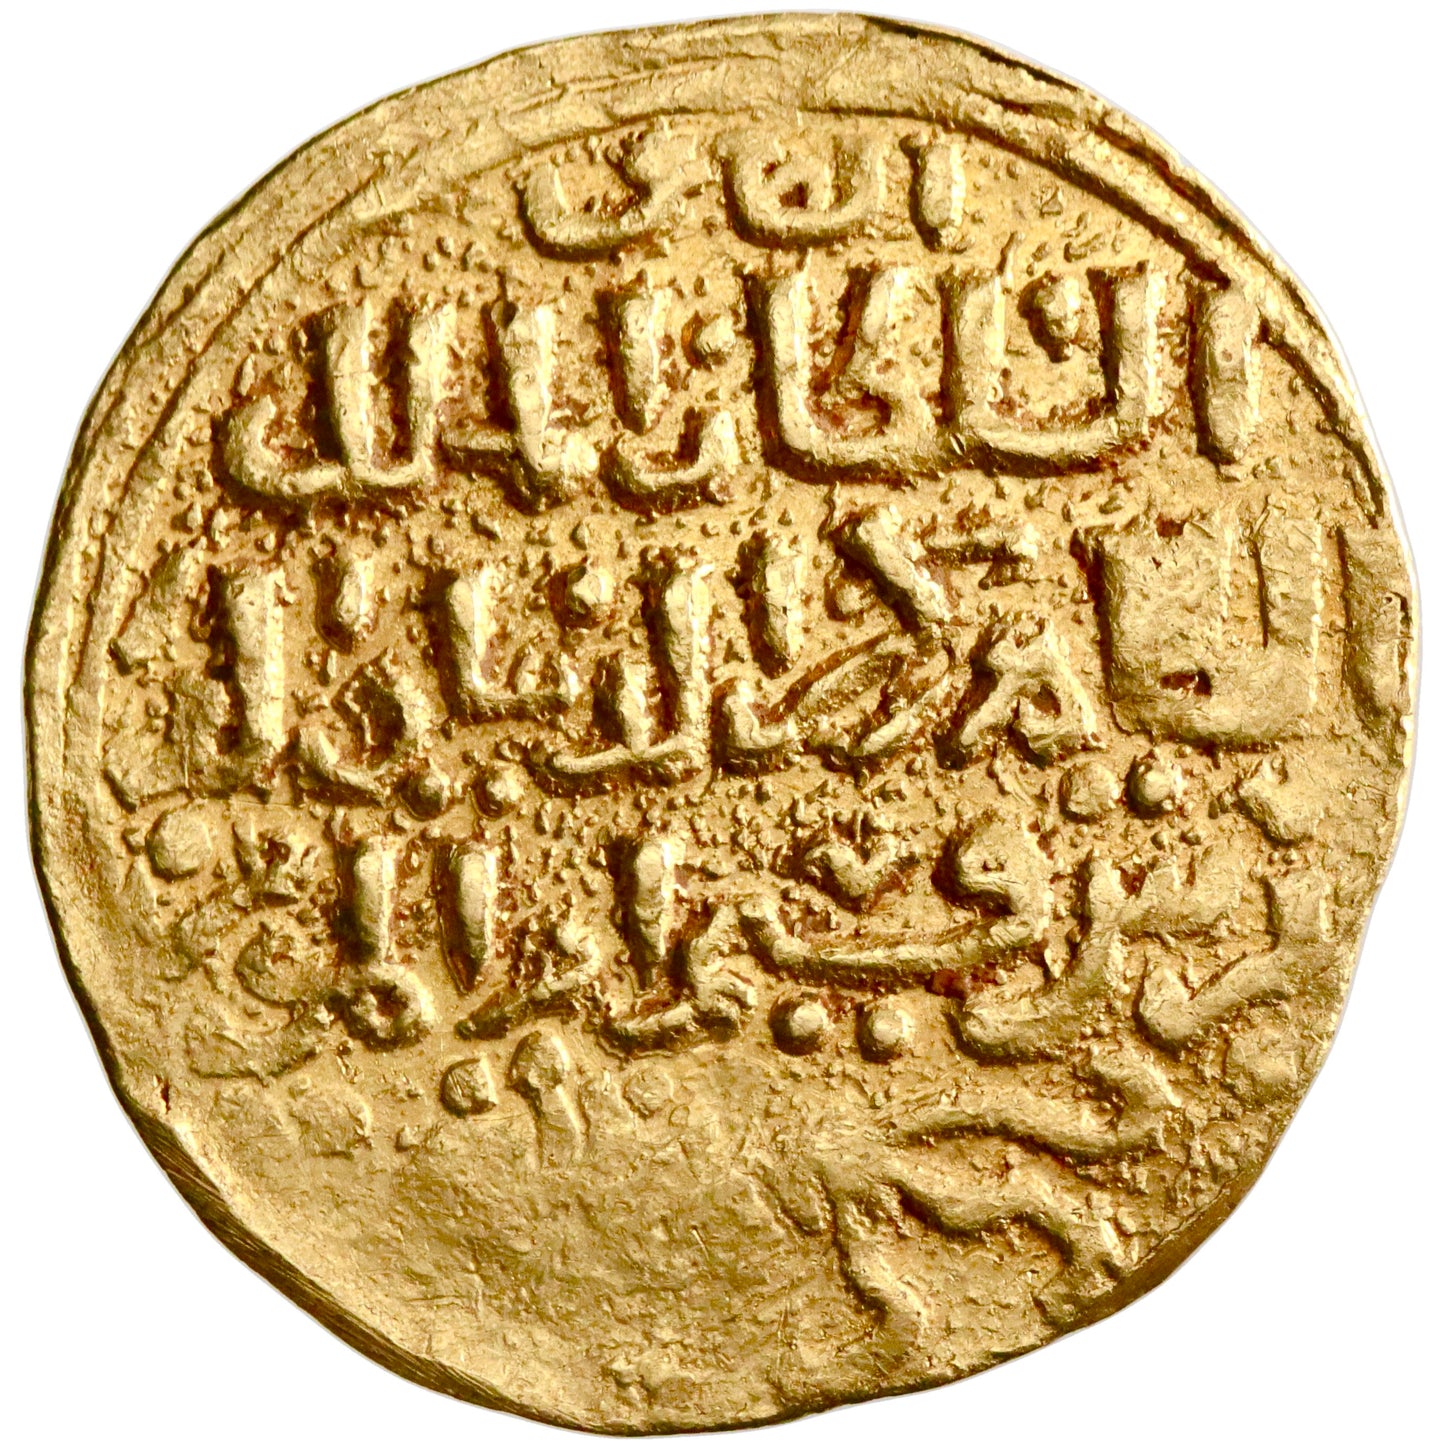 Bahri Mamluk, Baybars I, gold dinar, al-Iskandariya (Alexandria) mint, AH 658-676, advancing lion